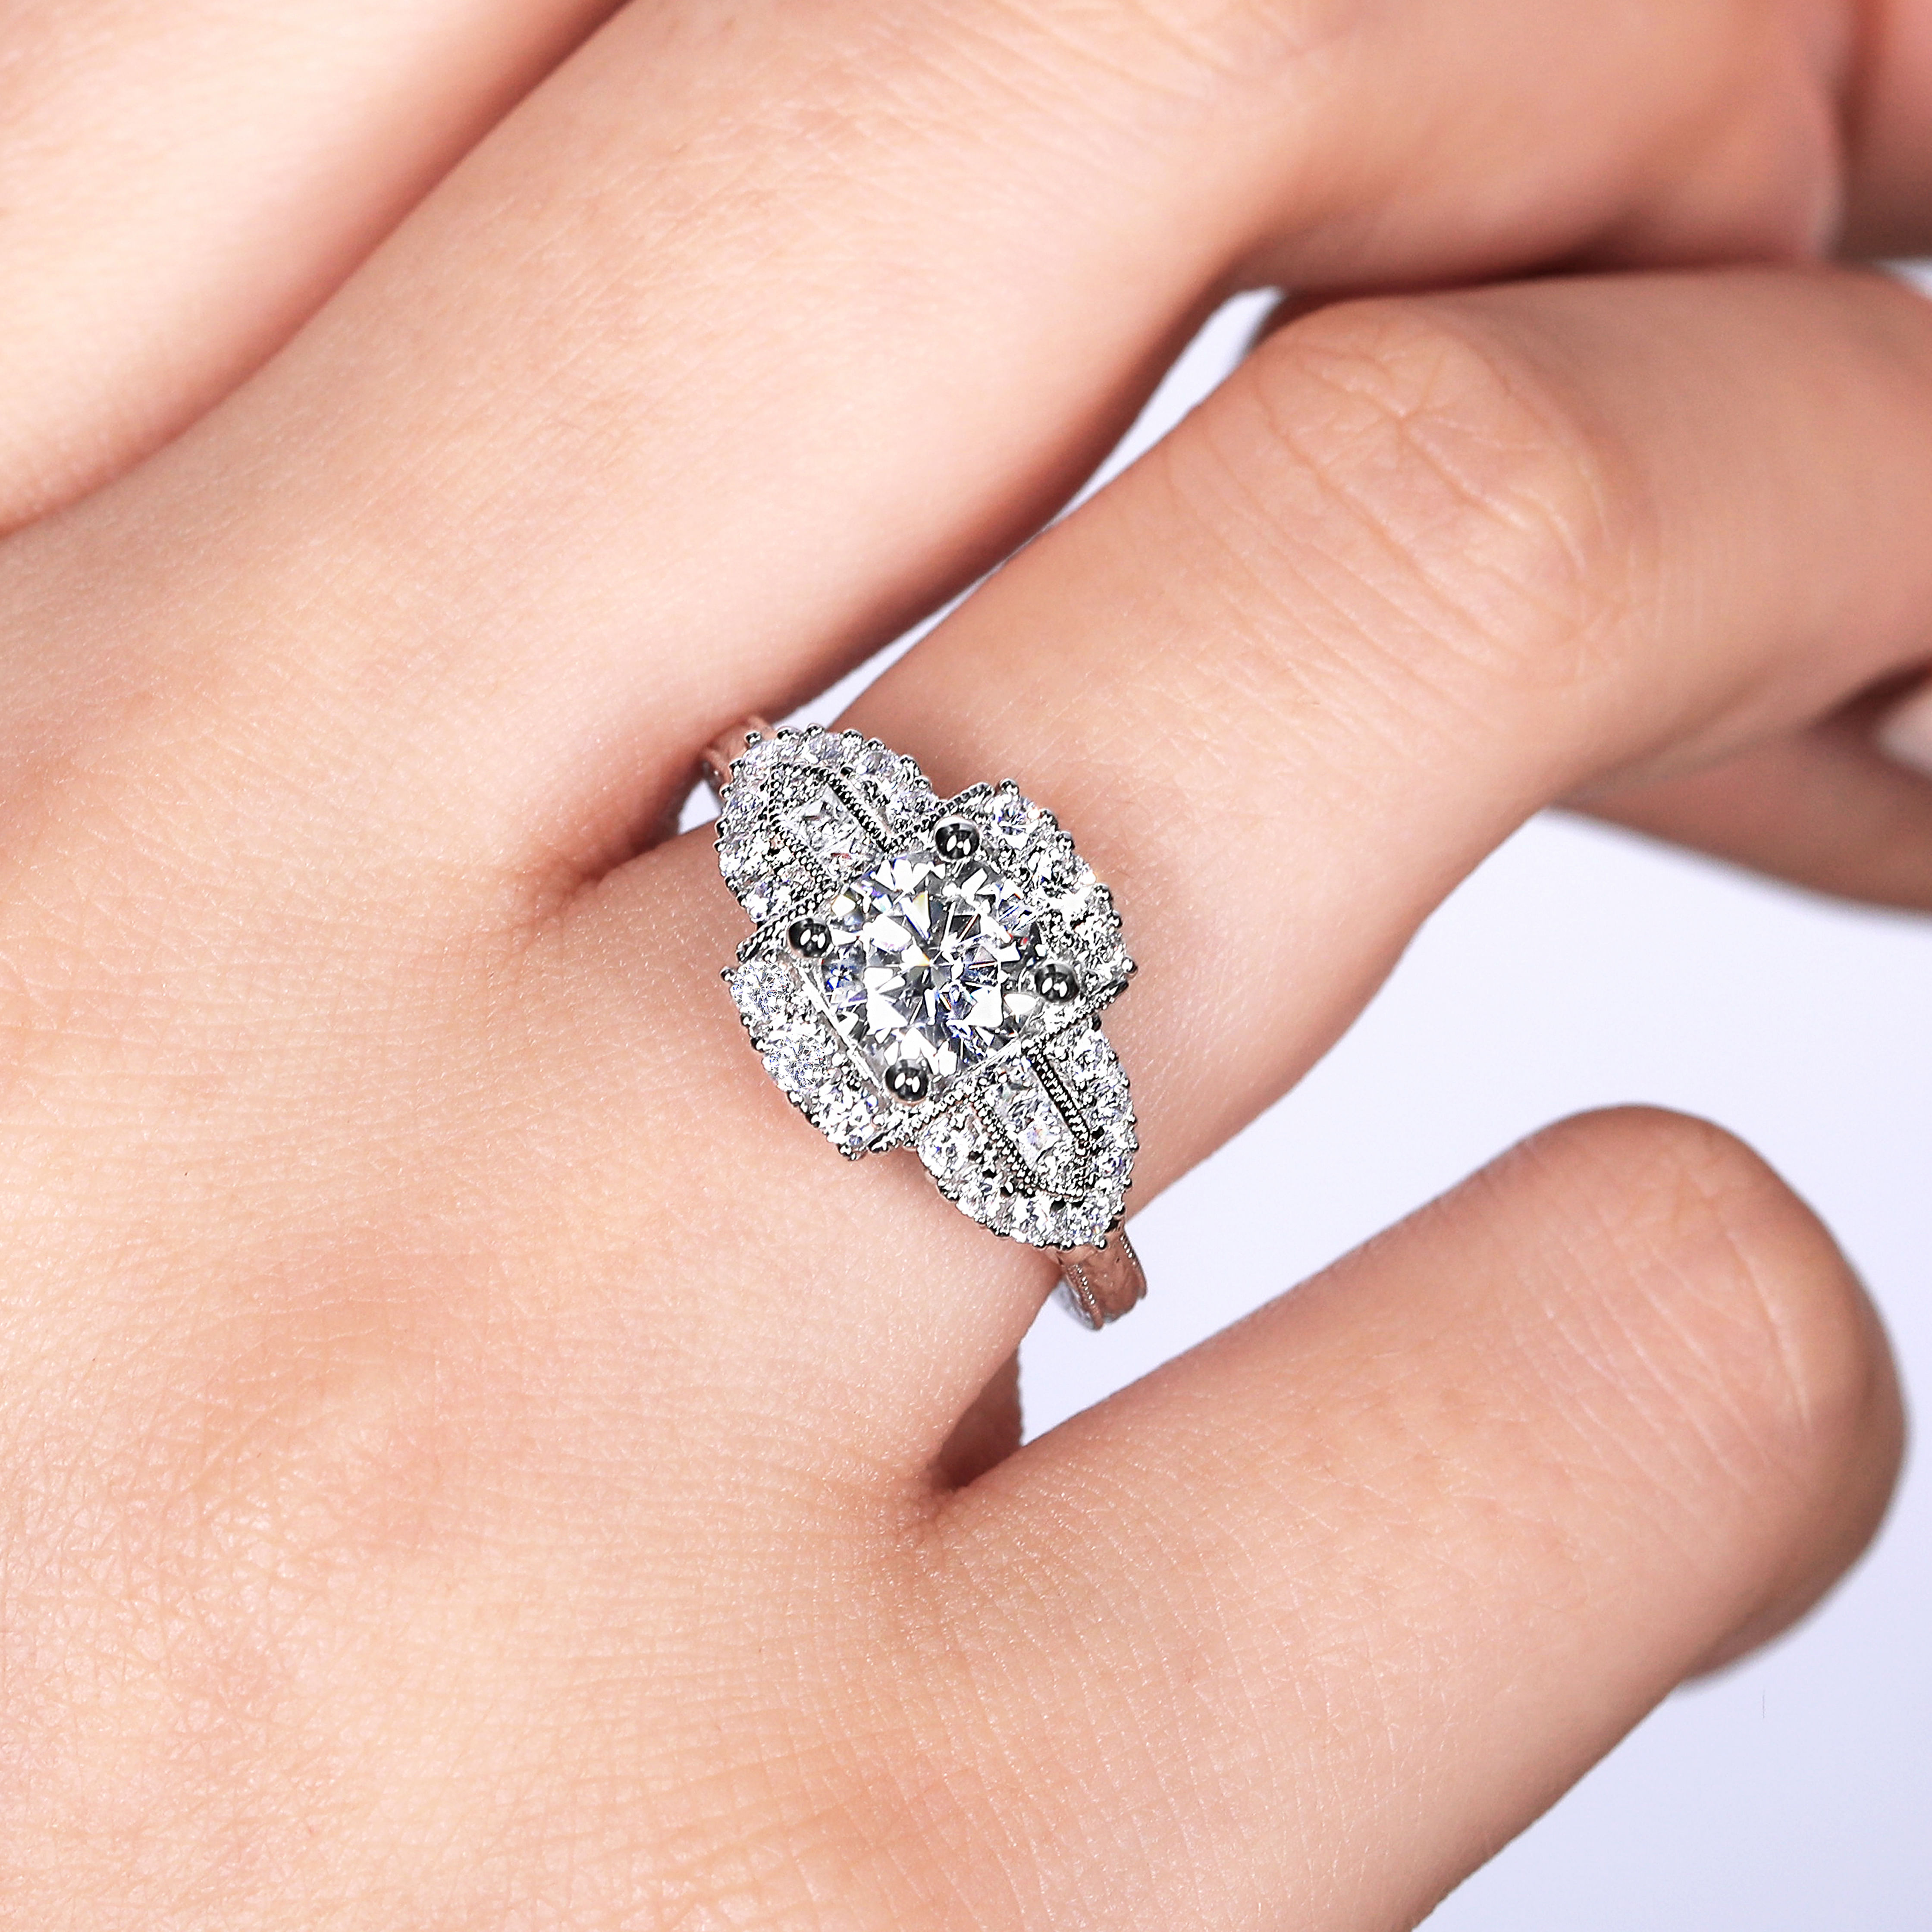 Vintage Inspired 14k White Gold Round Diamond Engagement Ring